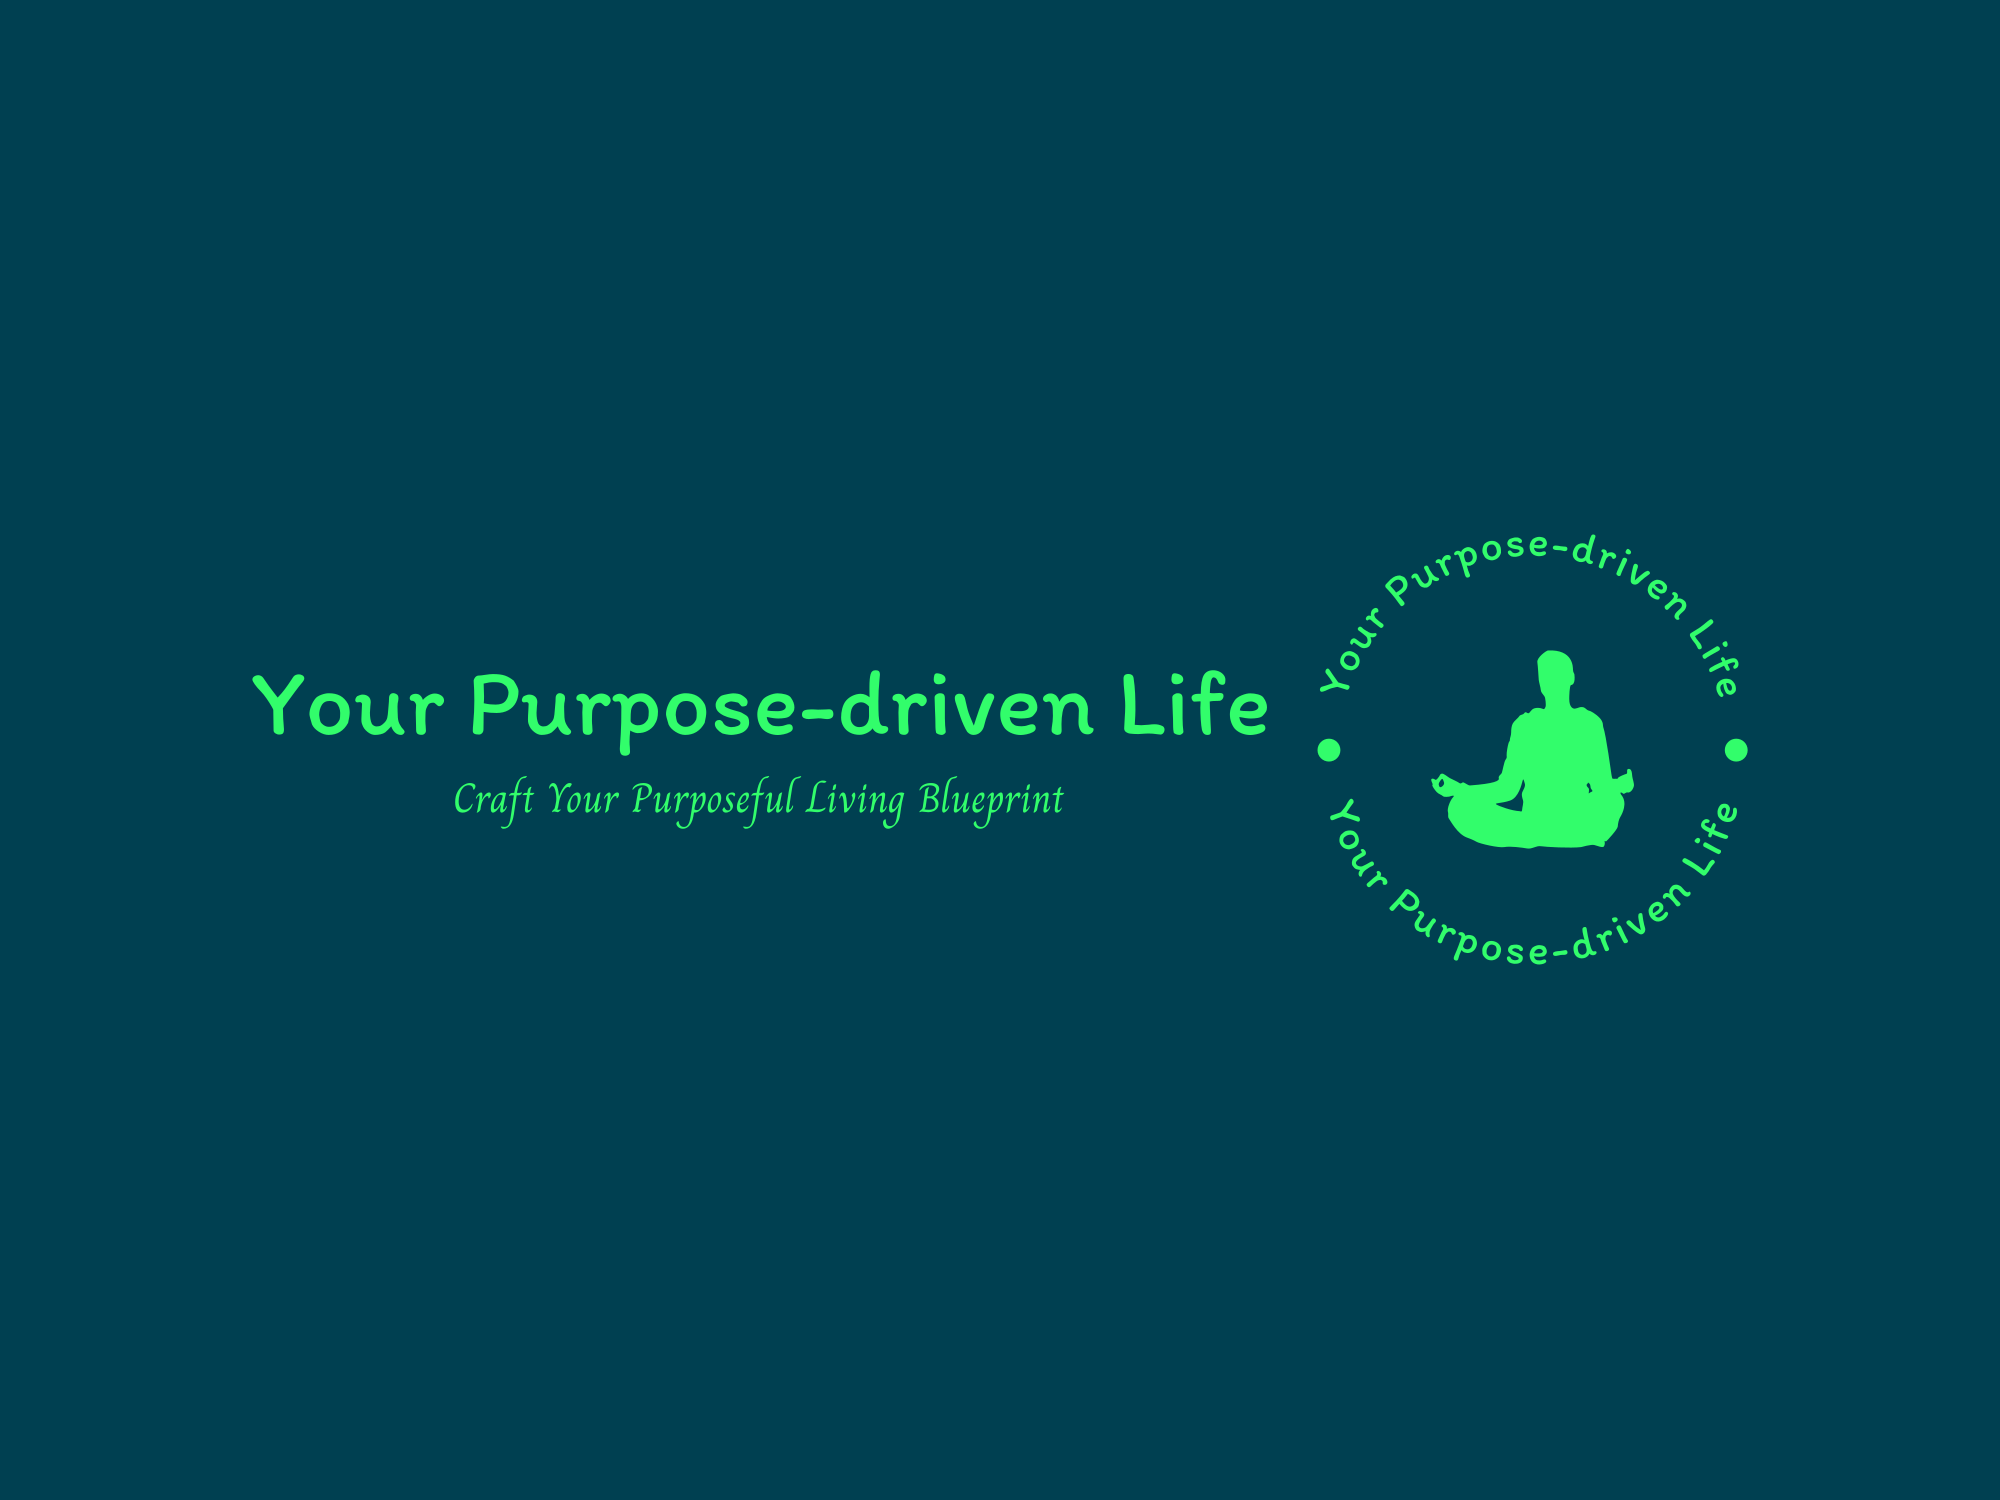 Your Purpose-driven Life LLC